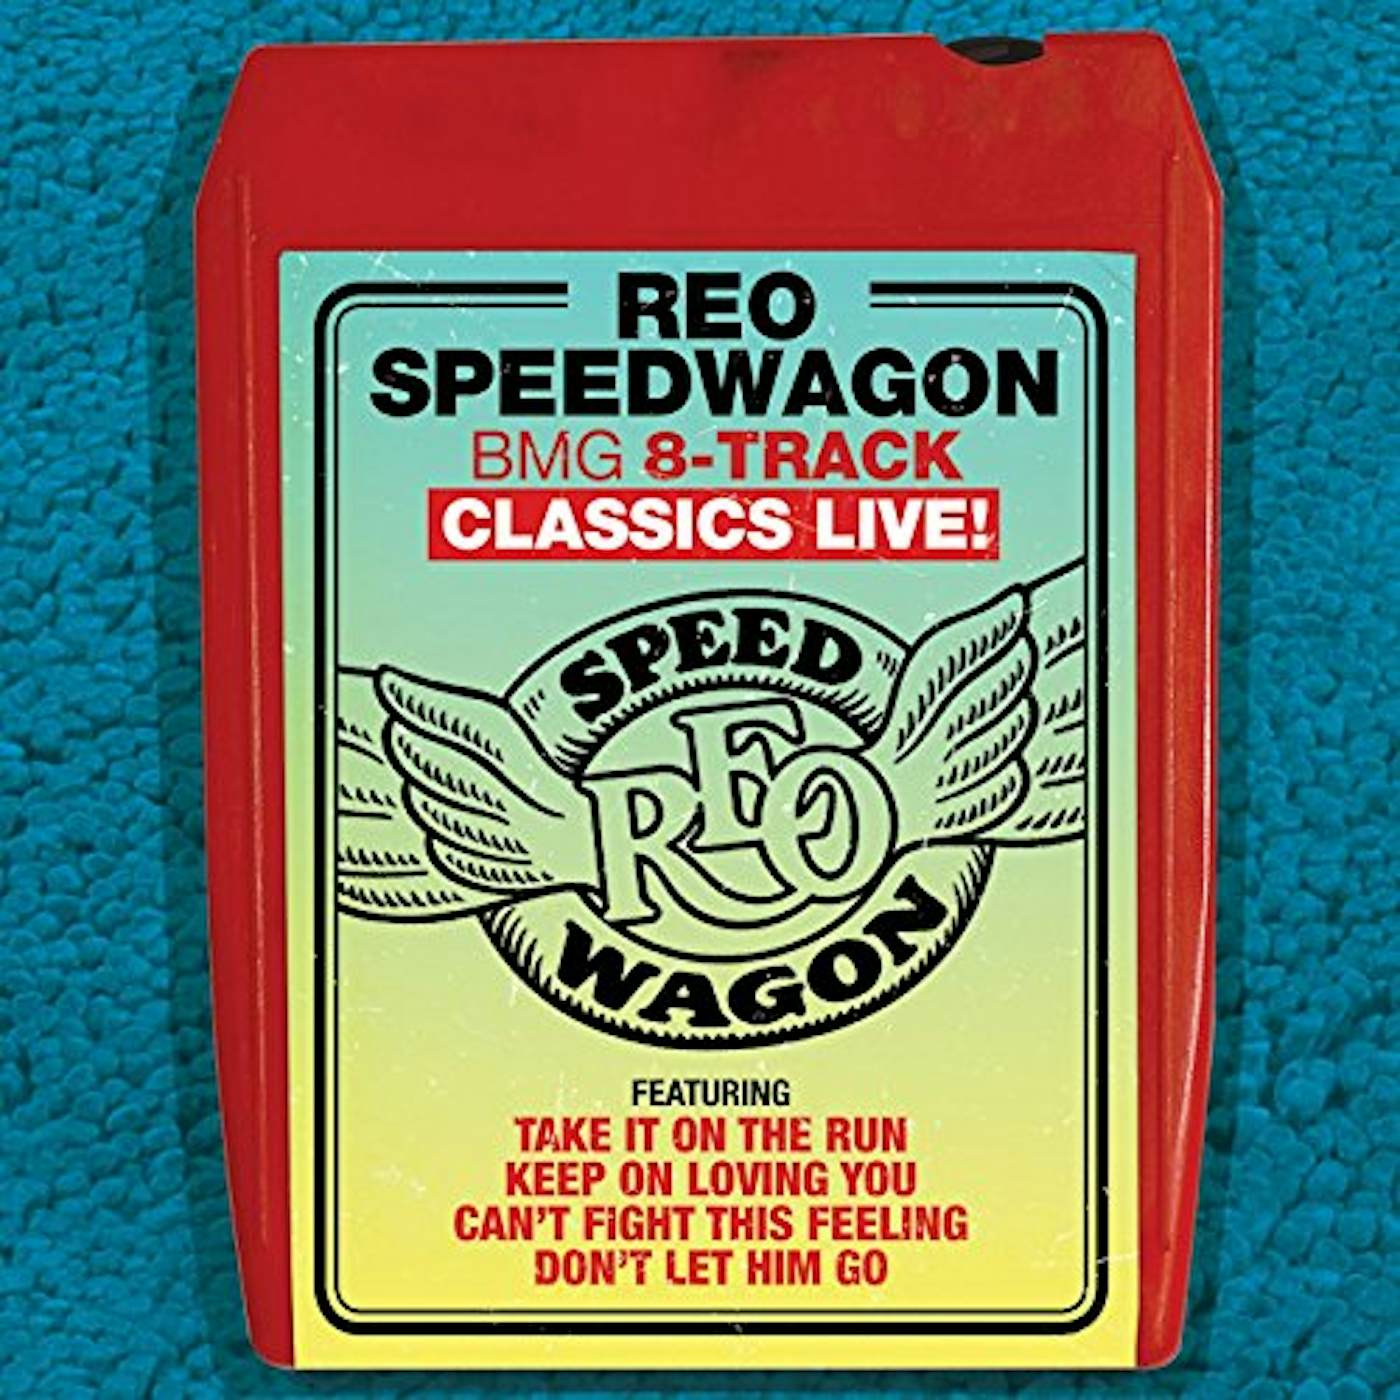 REO Speedwagon BMG 8-TRACK CLASSICS LIVE CD